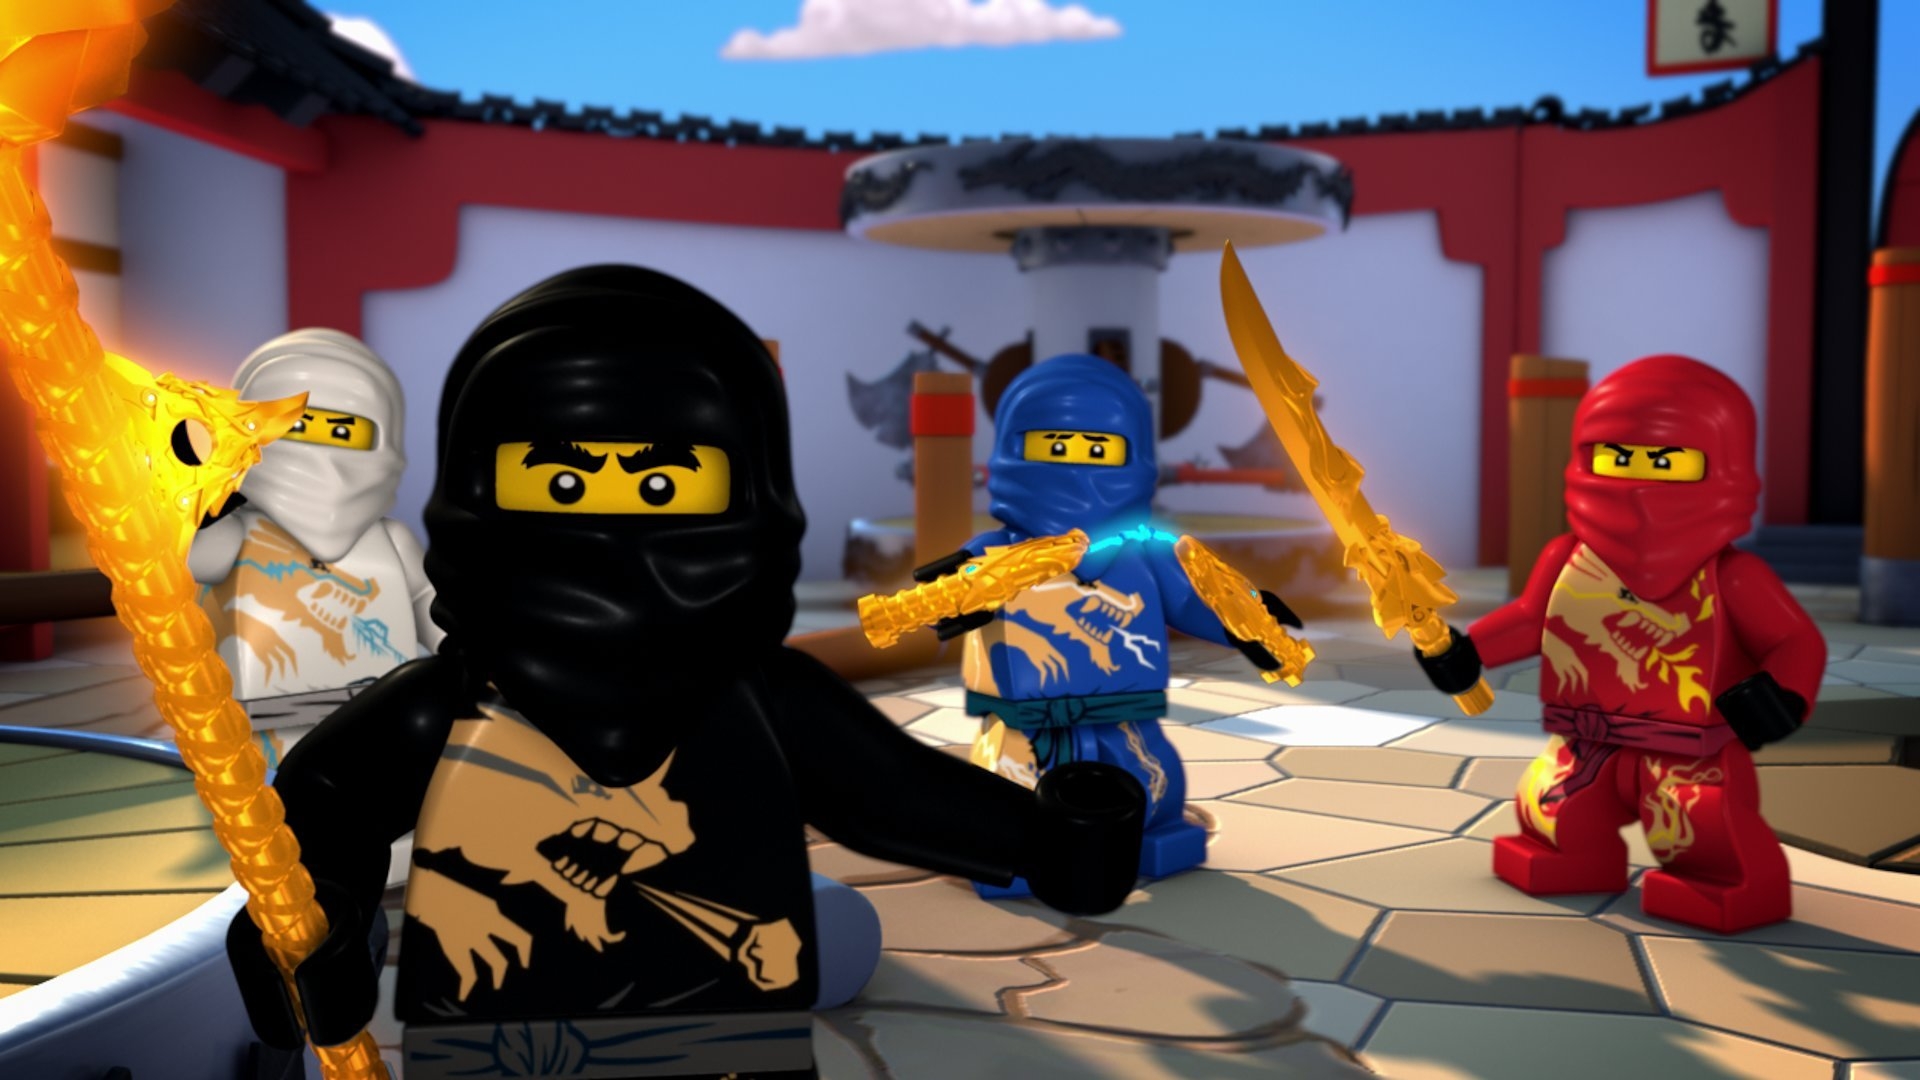 Lego Ninjago: Masters Of Spinjitzu Fonds d'écran, Arrières-plan | 1920x1080 | ID:4921381920 x 1080